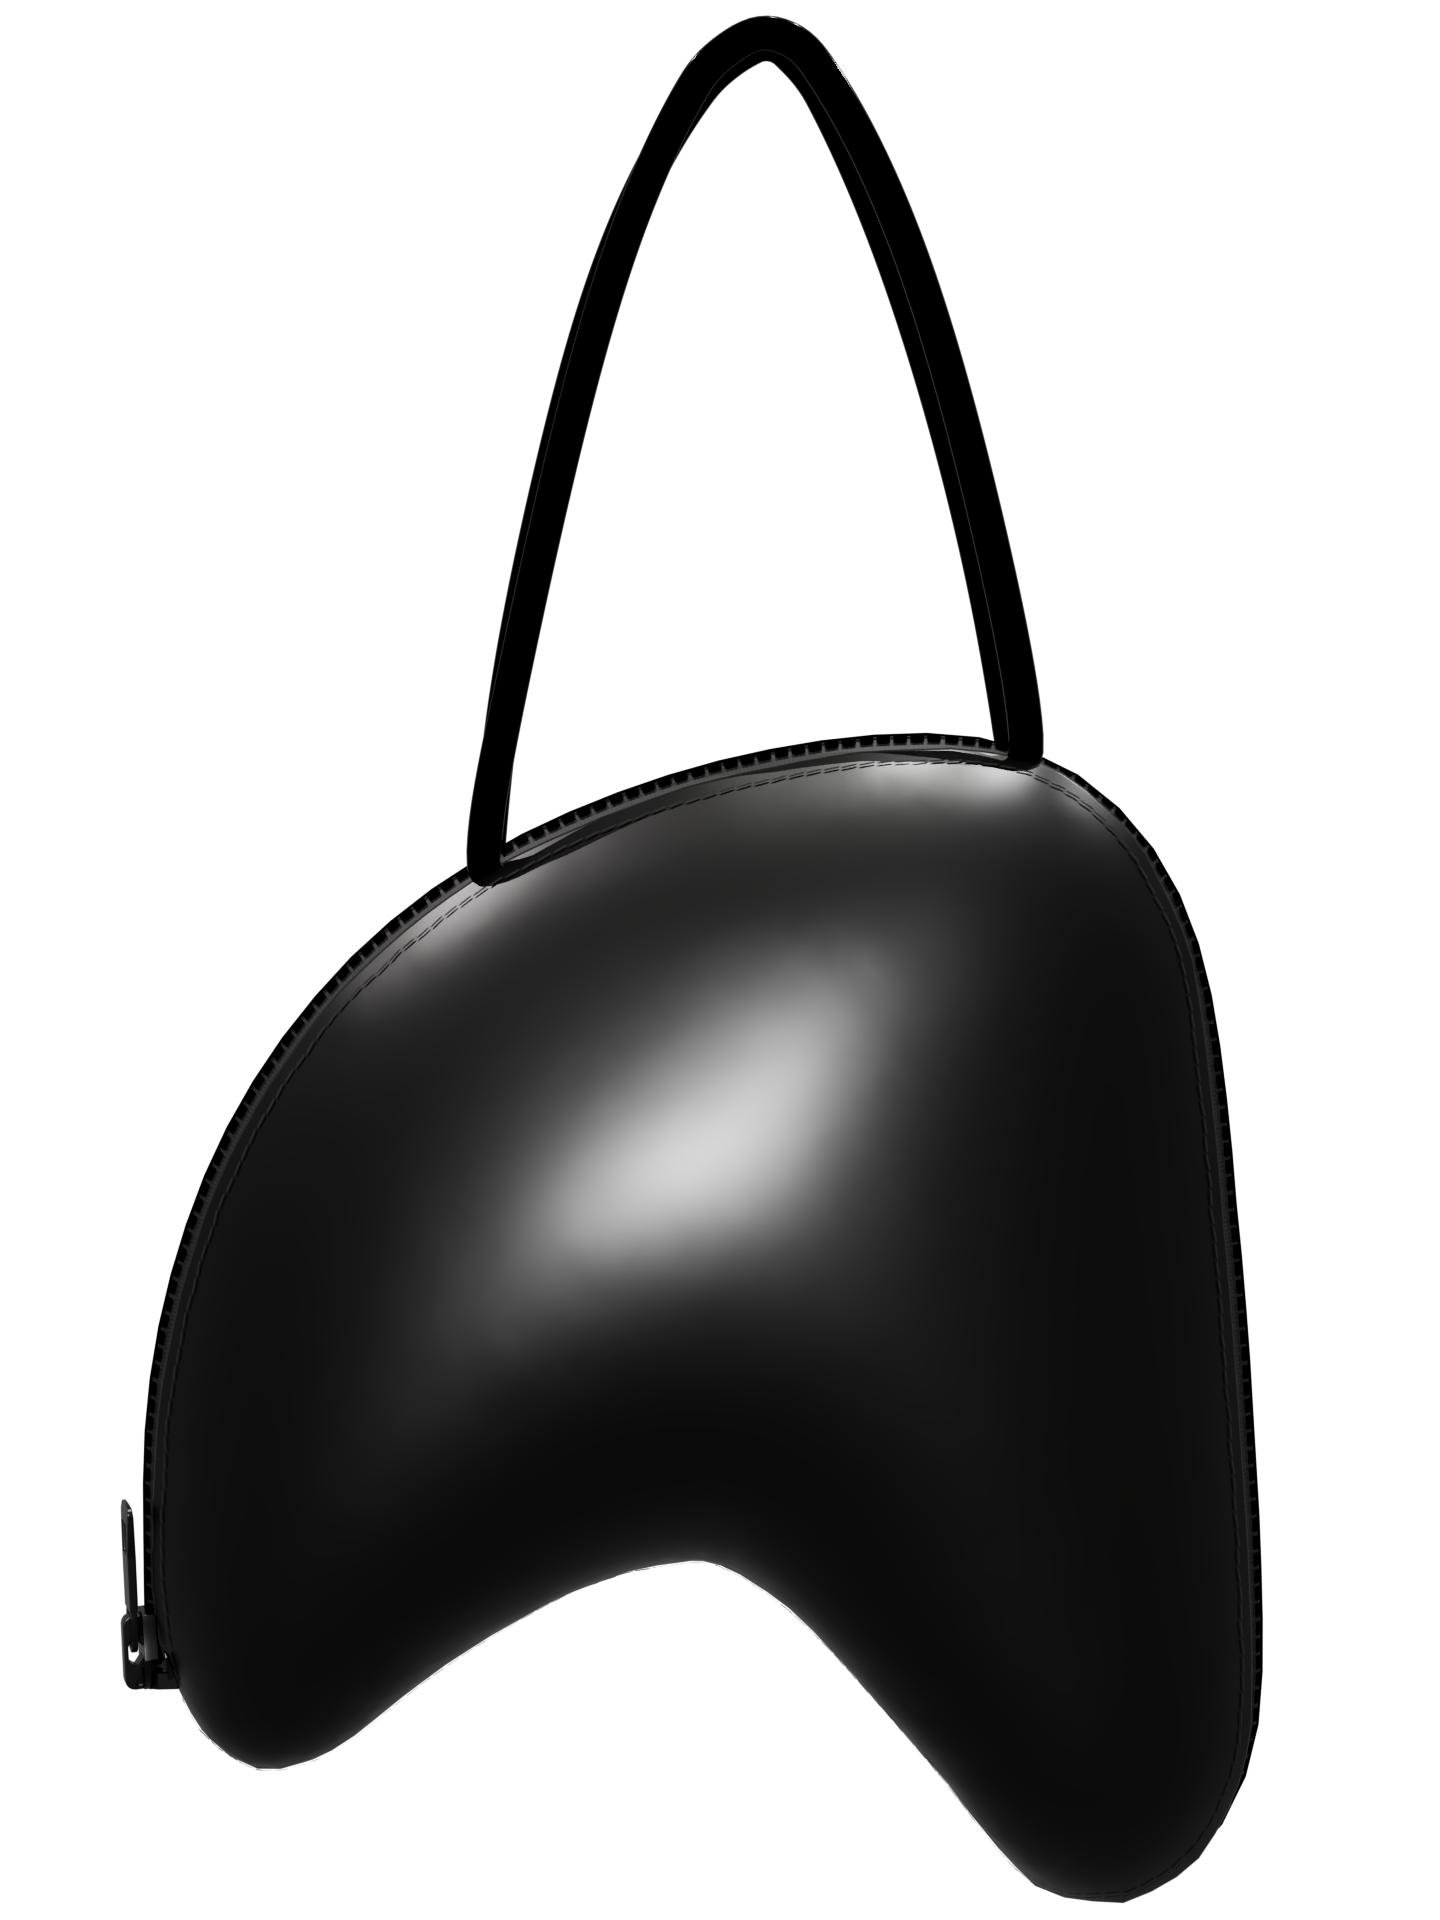 Black elegance bag by DIACHENKO ALINA